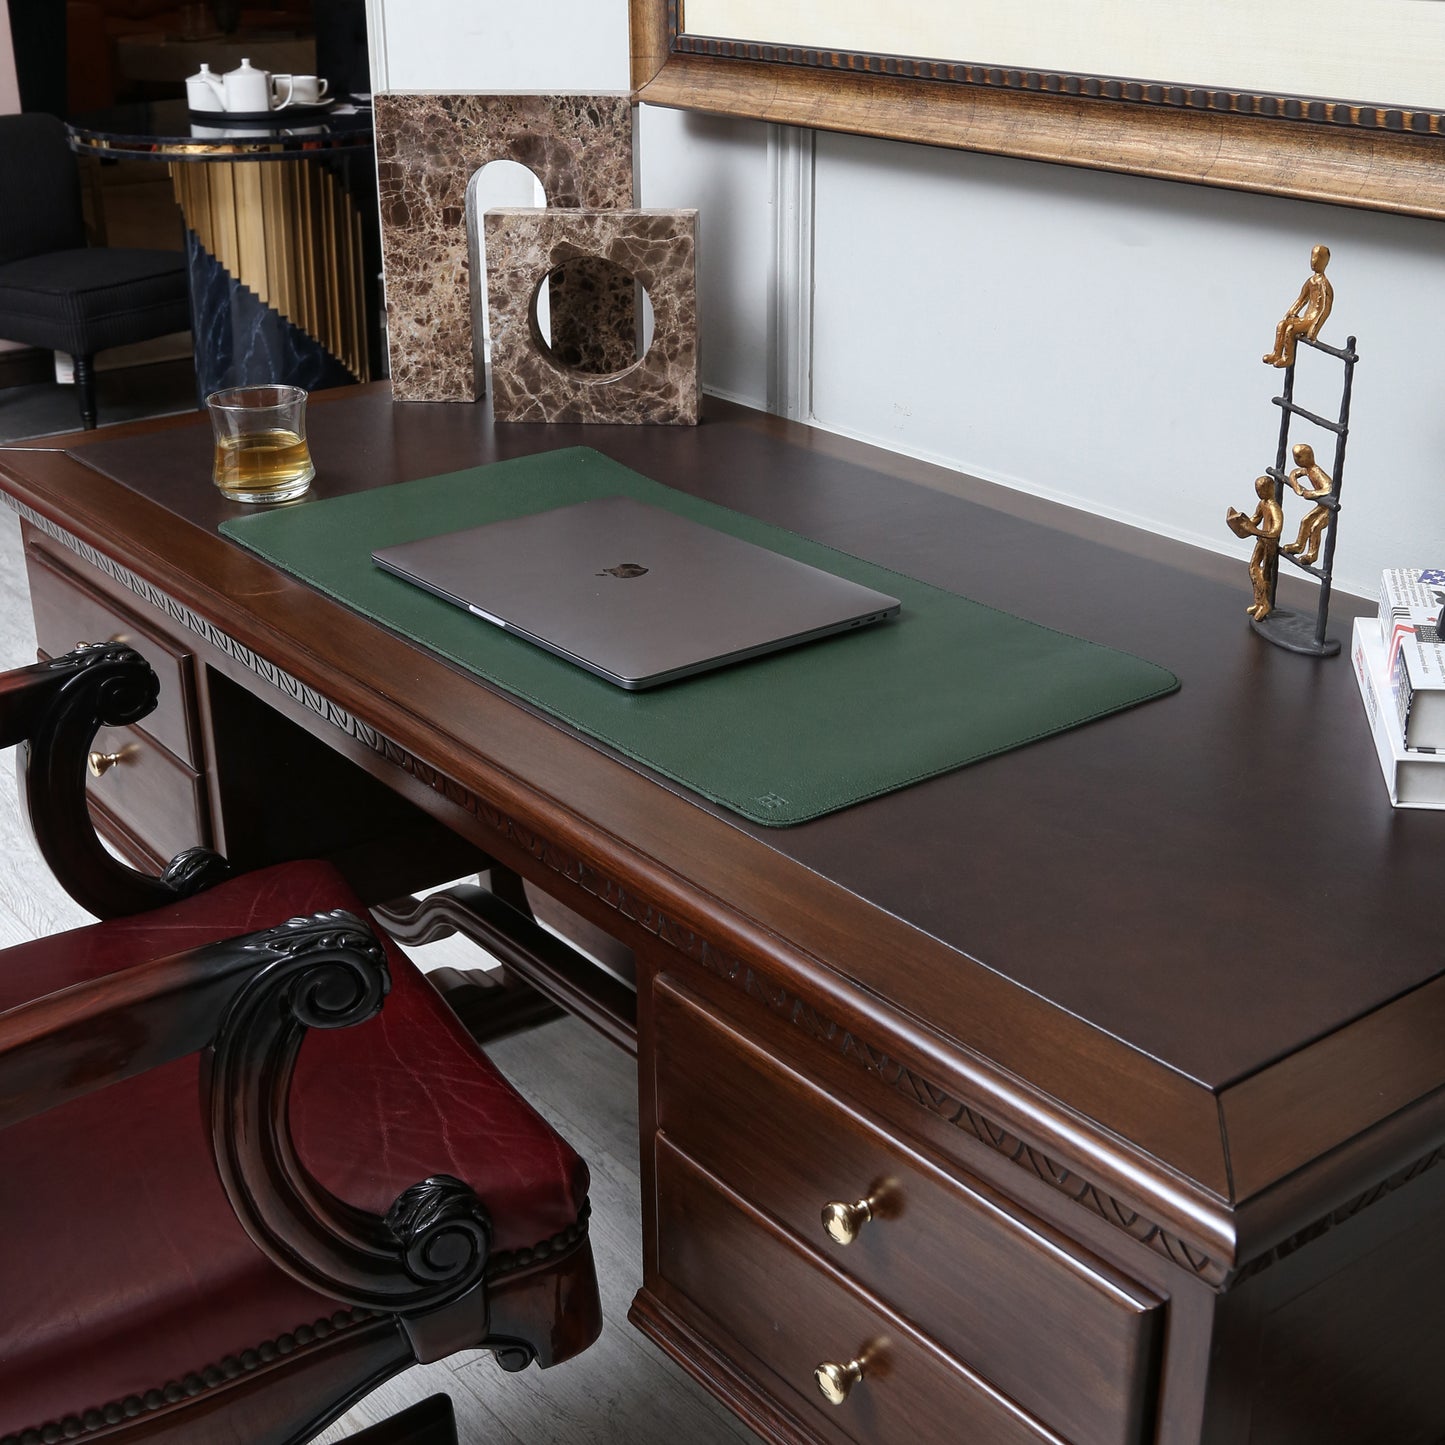 Leather Desk & Laptop Mat (Dark Green)